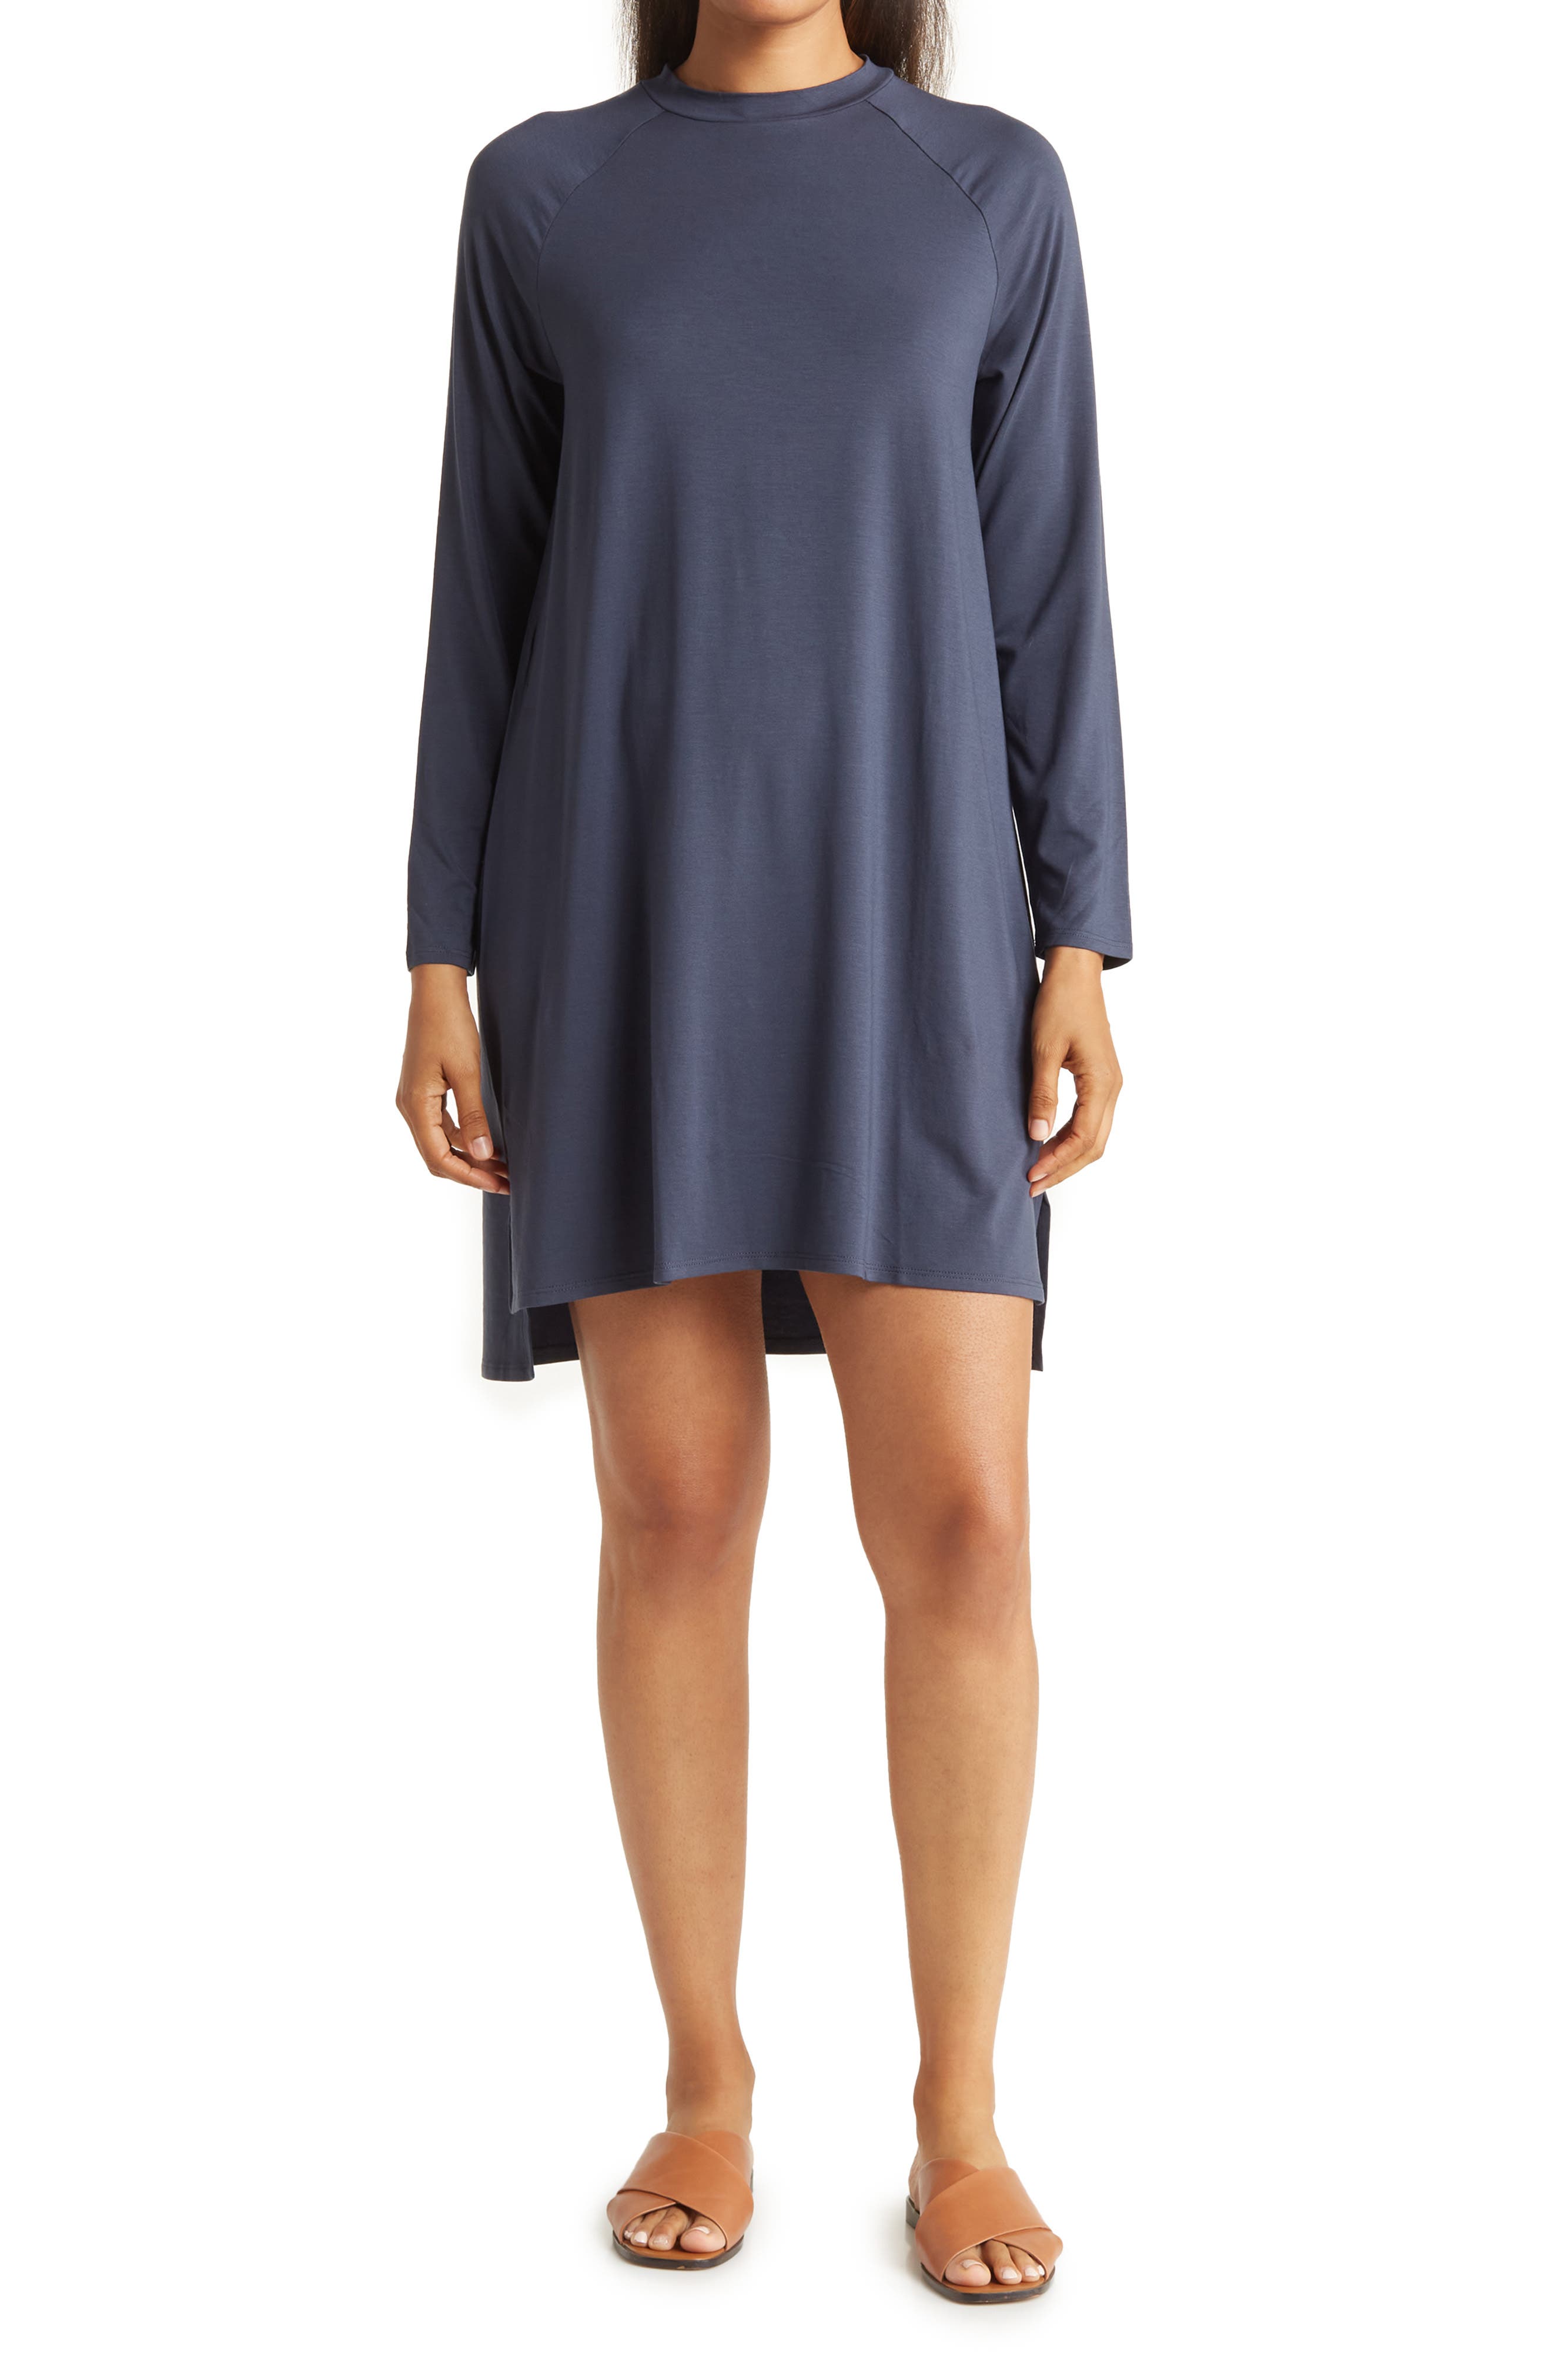 NEW Eileen Fisher Moon Jewel Neck Short Sleeve Dress  XS XL S 